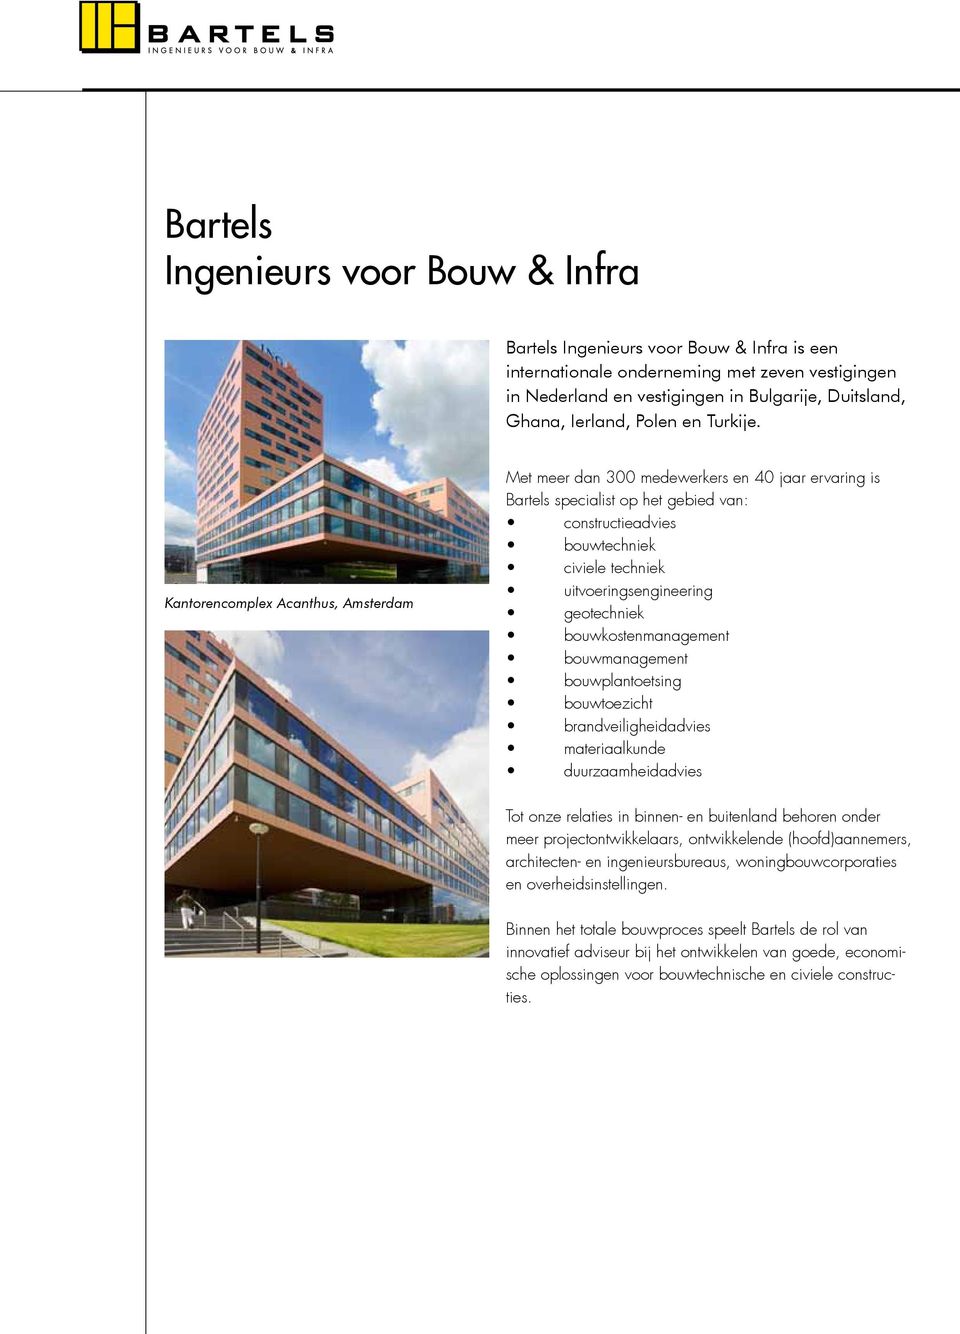 Kantorencomplex Acanthus, Amsterdam Met meer dan 300 medewerkers en 40 jaar ervaring is Bartels specialist op het gebied van: constructieadvies bouwtechniek civiele techniek uitvoeringsengineering